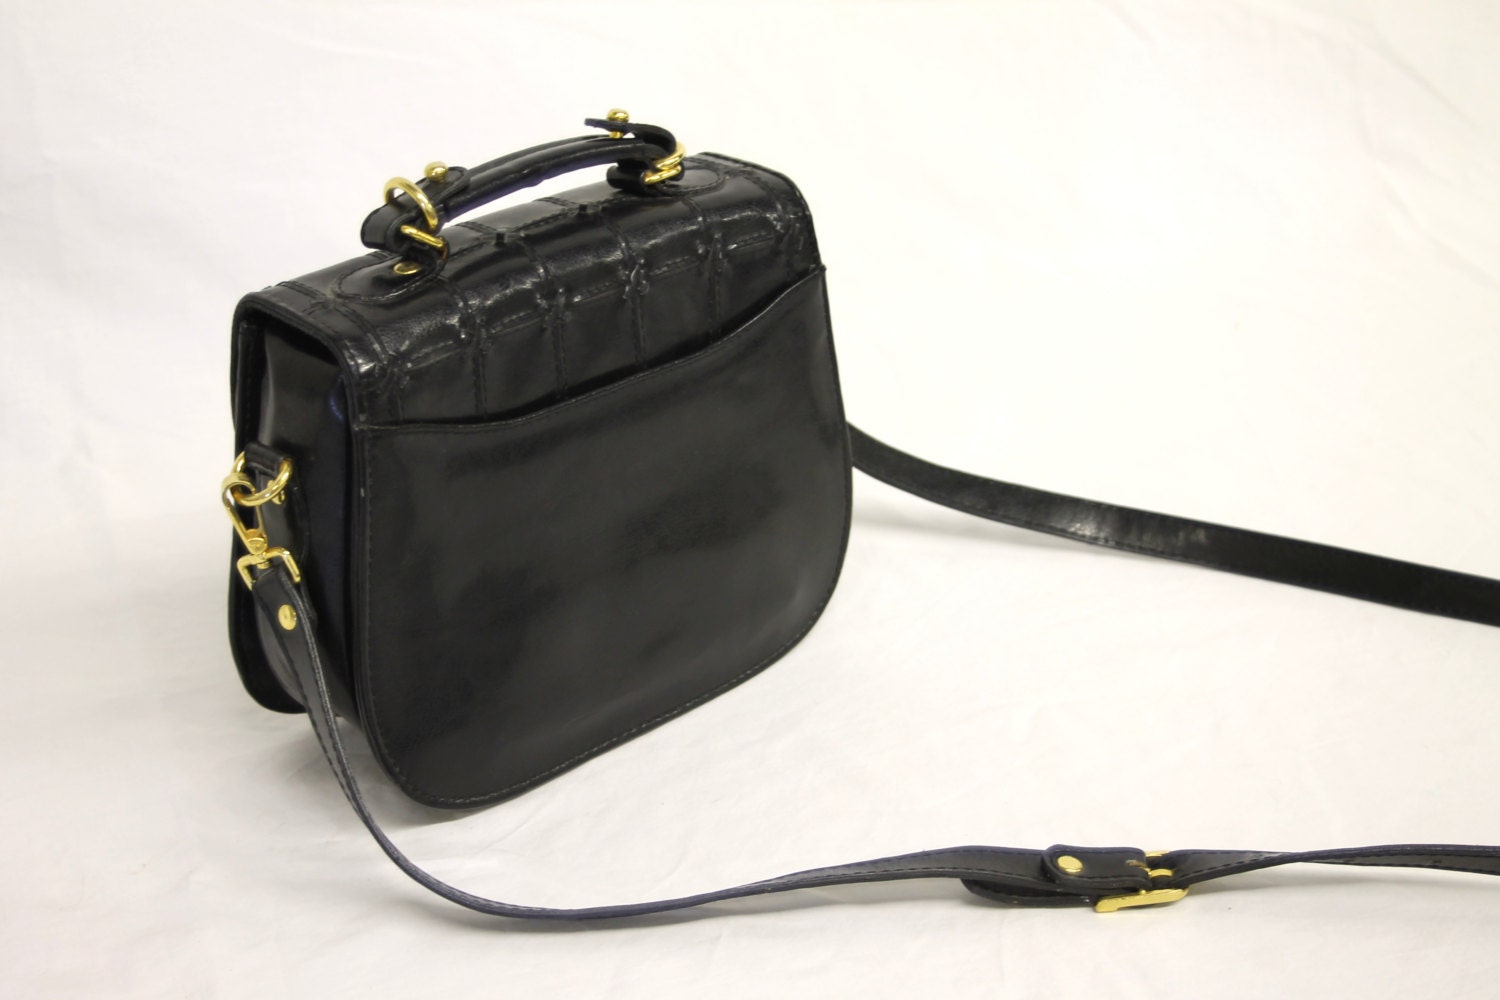 Authentic VERUCCI 90s VINTAGE Black Leather Handbag Cross Body